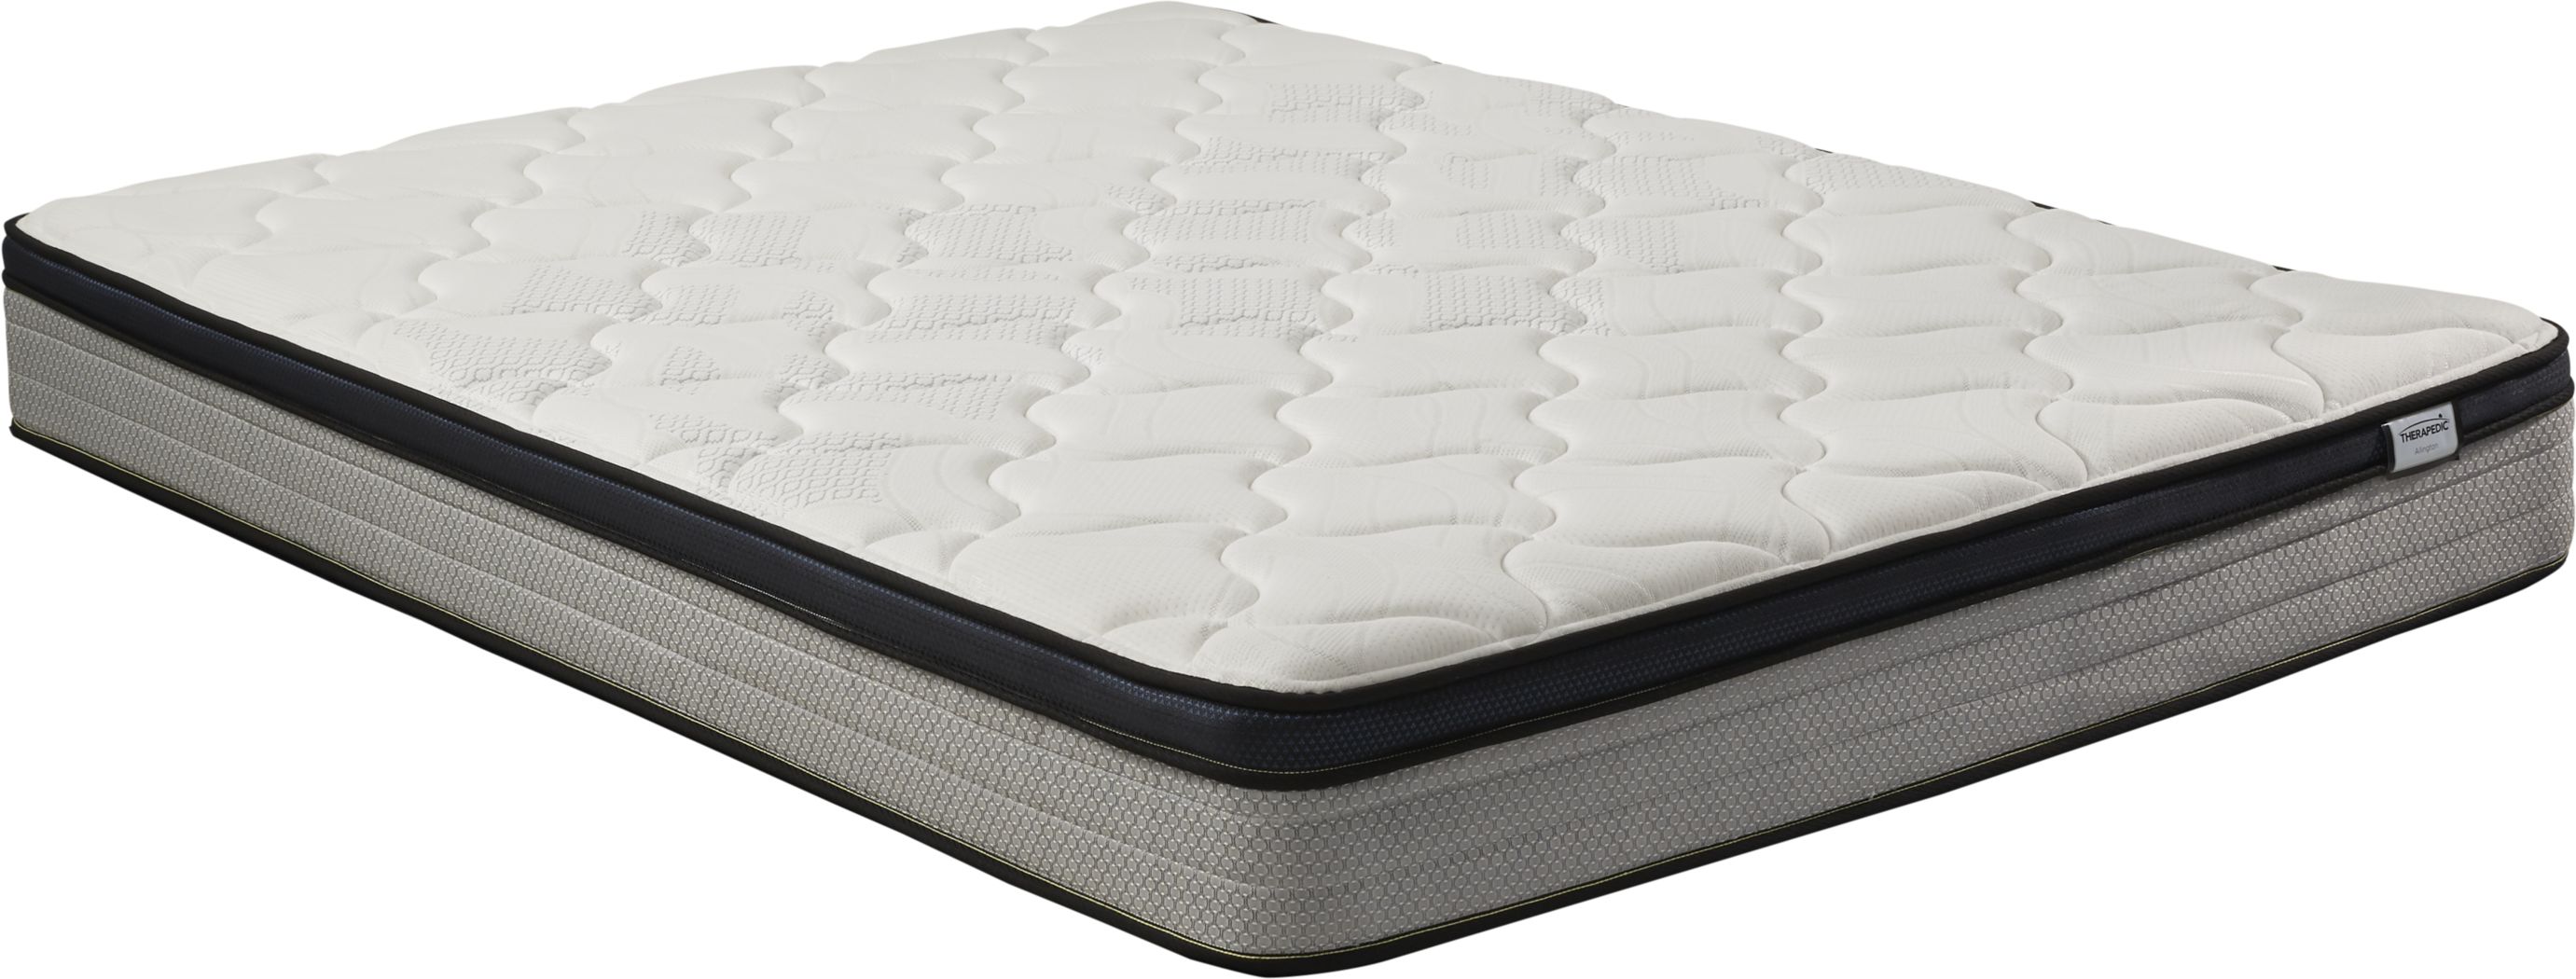 therapedic king mattress reviews